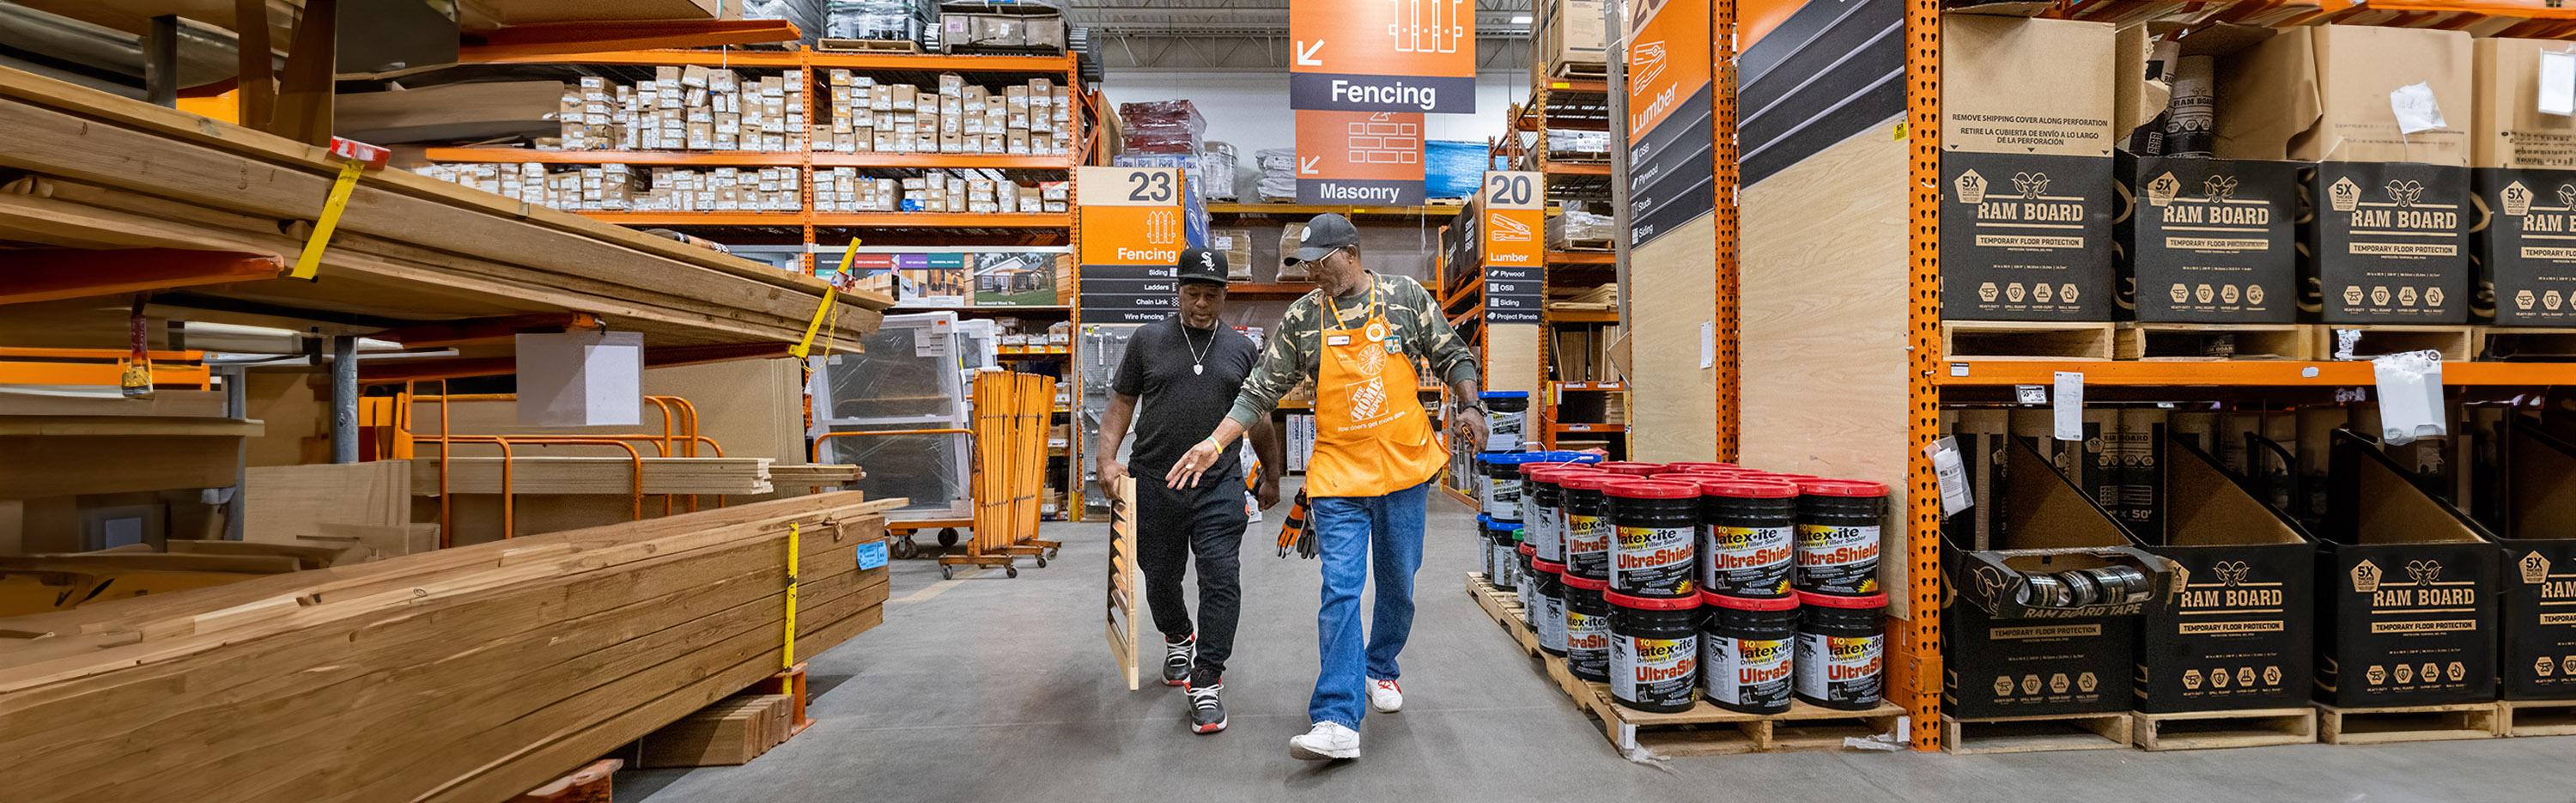 Associate and customer walking an aisle in lumber